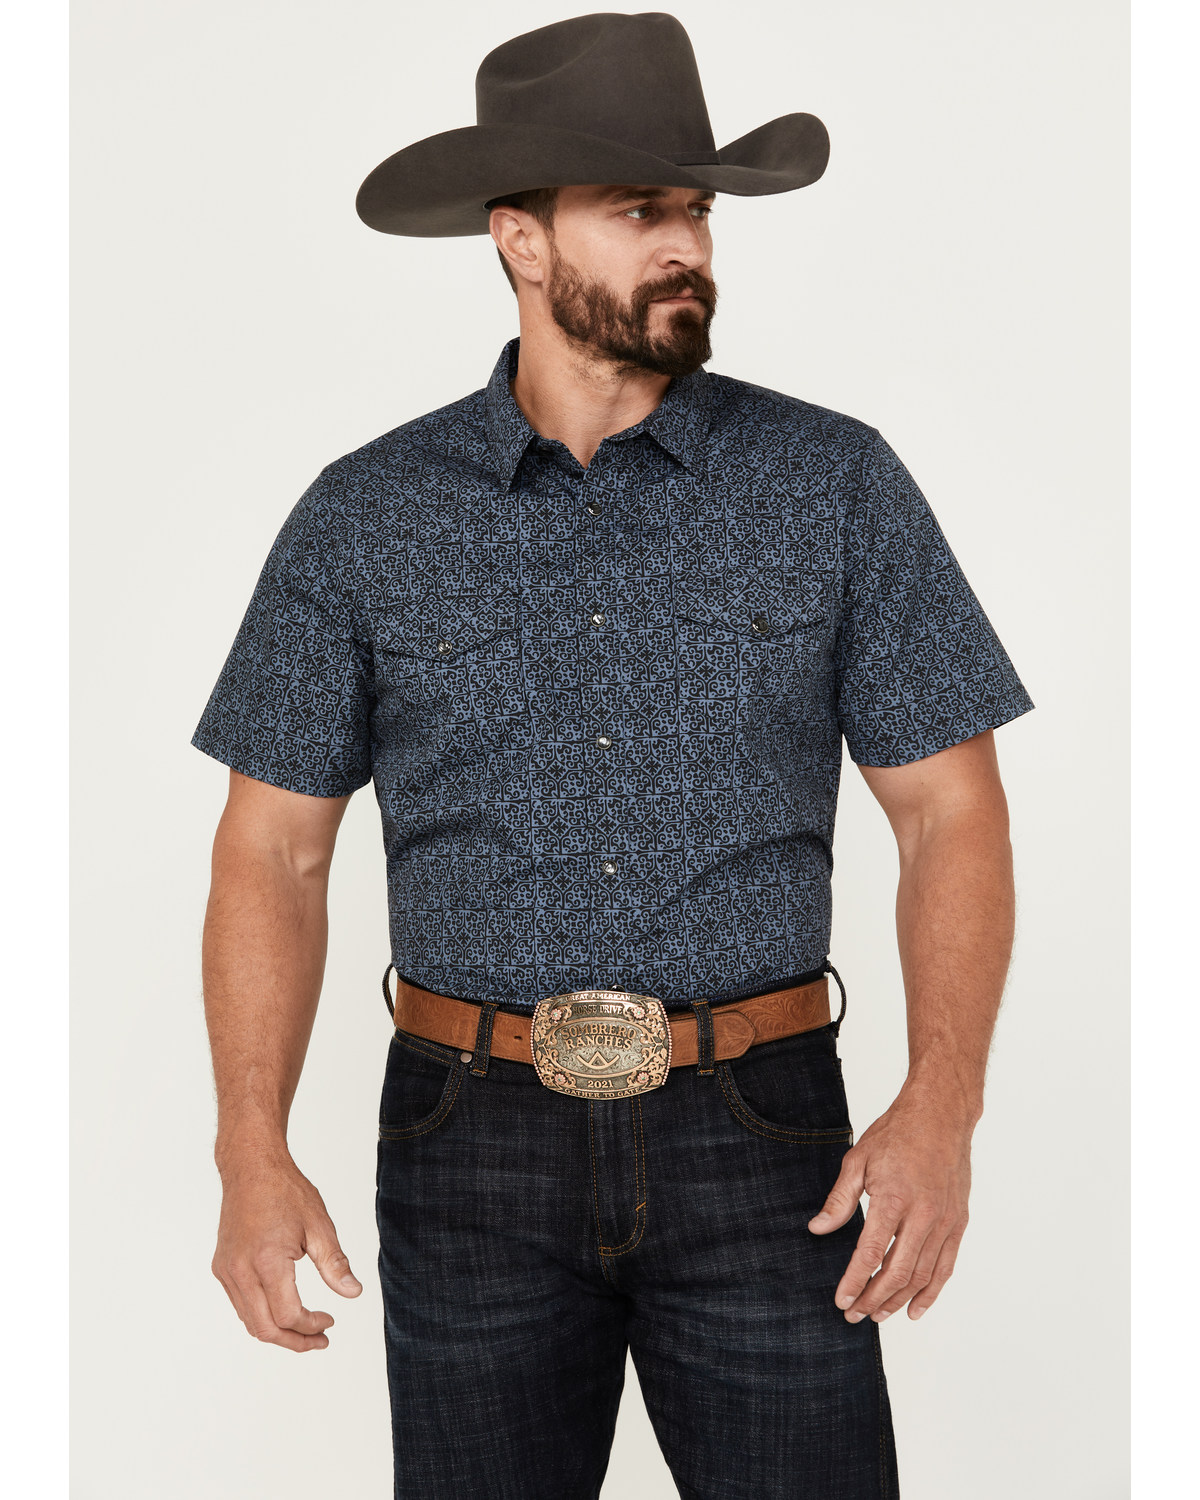 Gibson Trading Co Men's Medallion Print Short Sleeve Pearl Snap Western Shirt